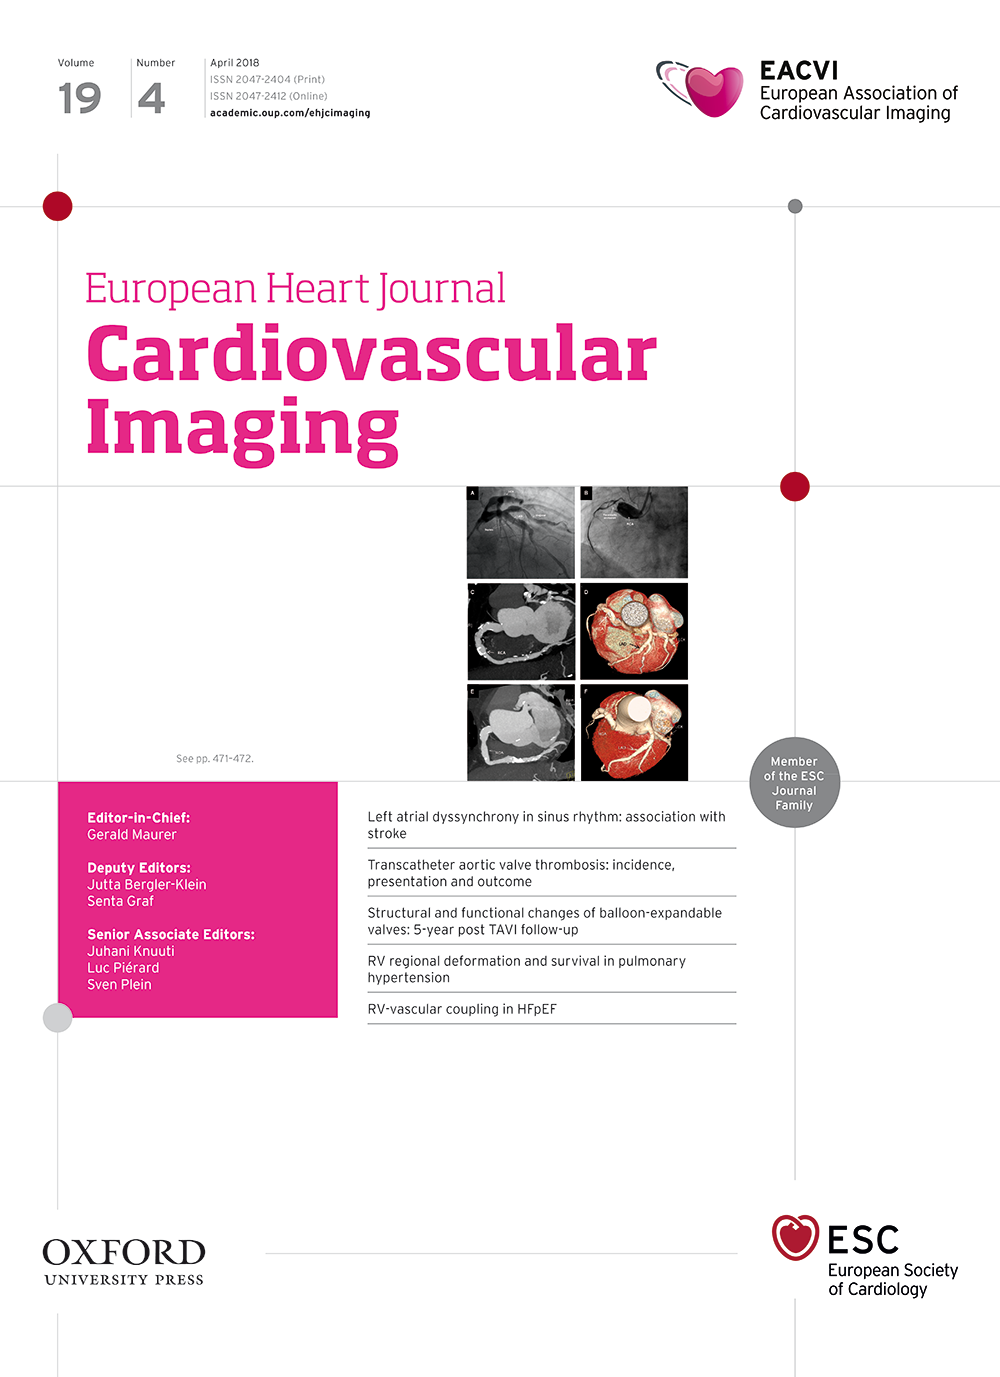 Journal-Cardiovascular-Imaging.png